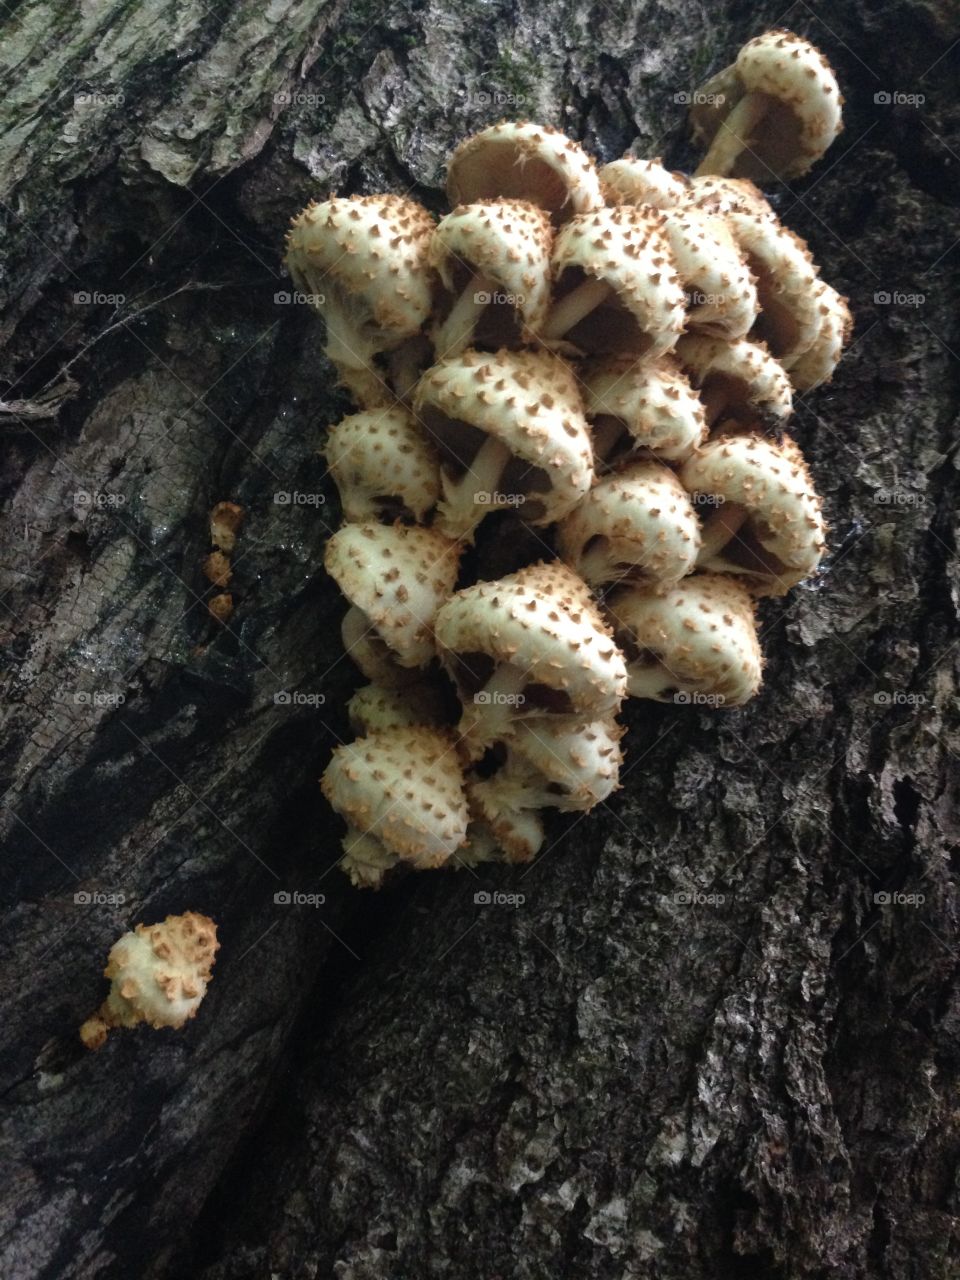 Cluster of unique mushrooms on tree
